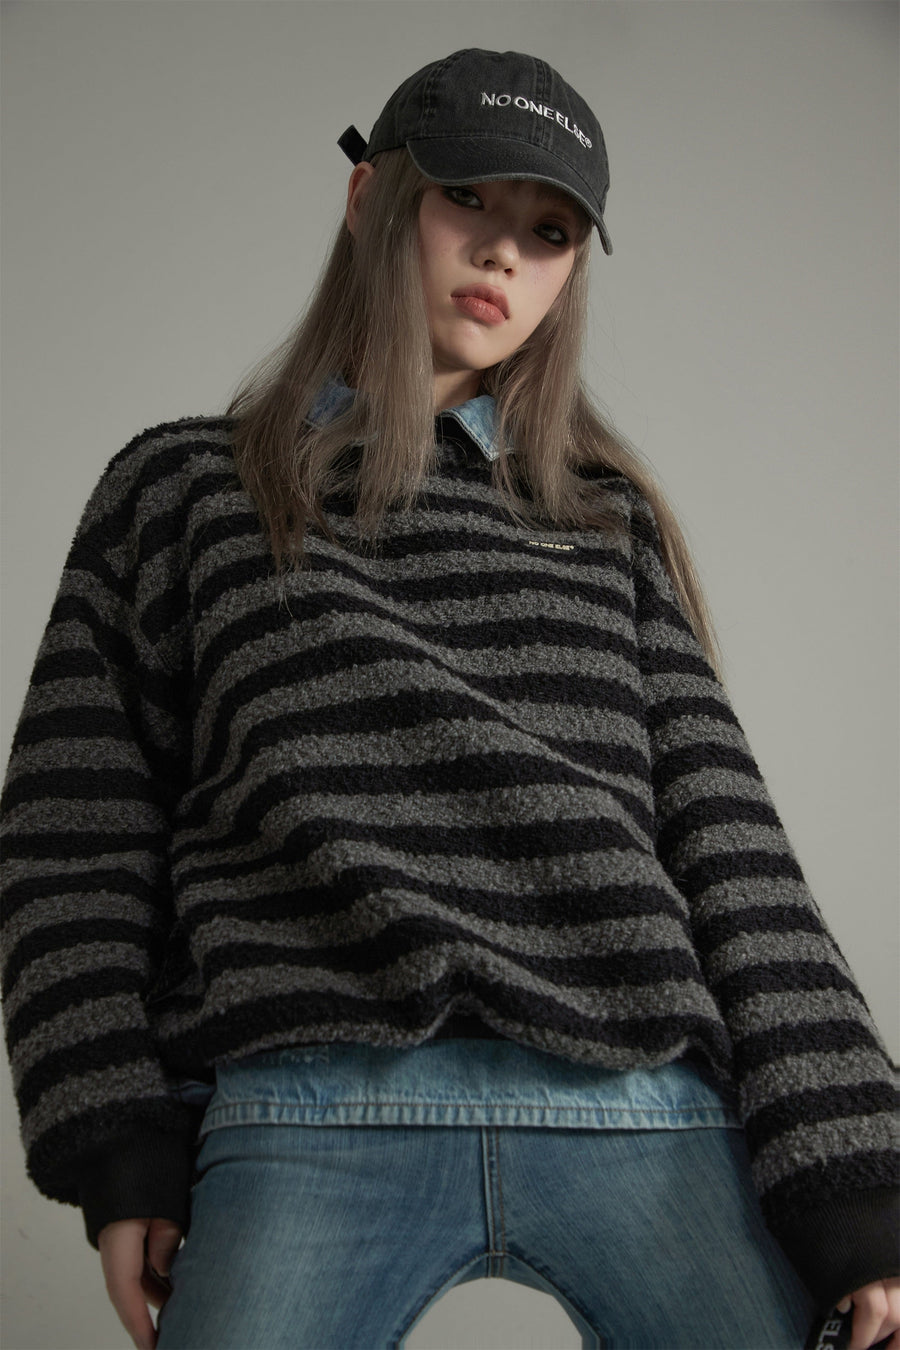 CHUU Striped Loose-Fit Sweatshirt